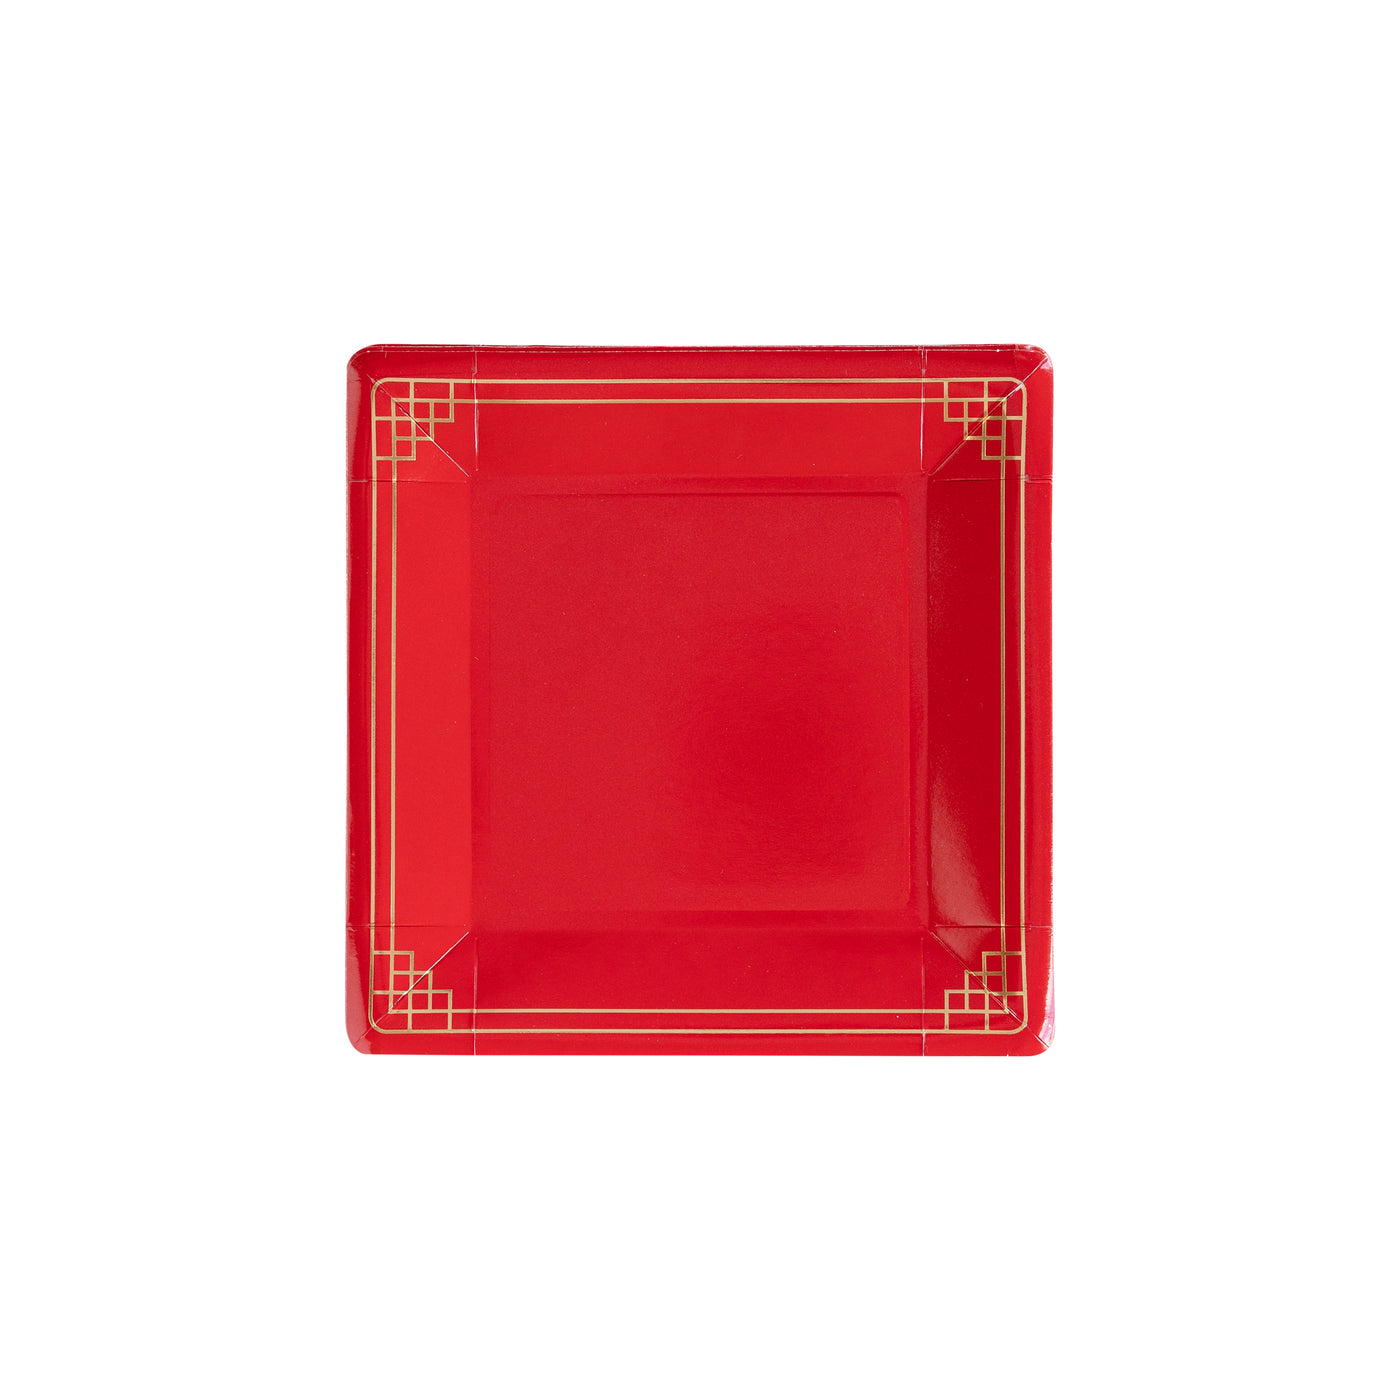 PLNY140 - Lunar New Year Square Border Plate